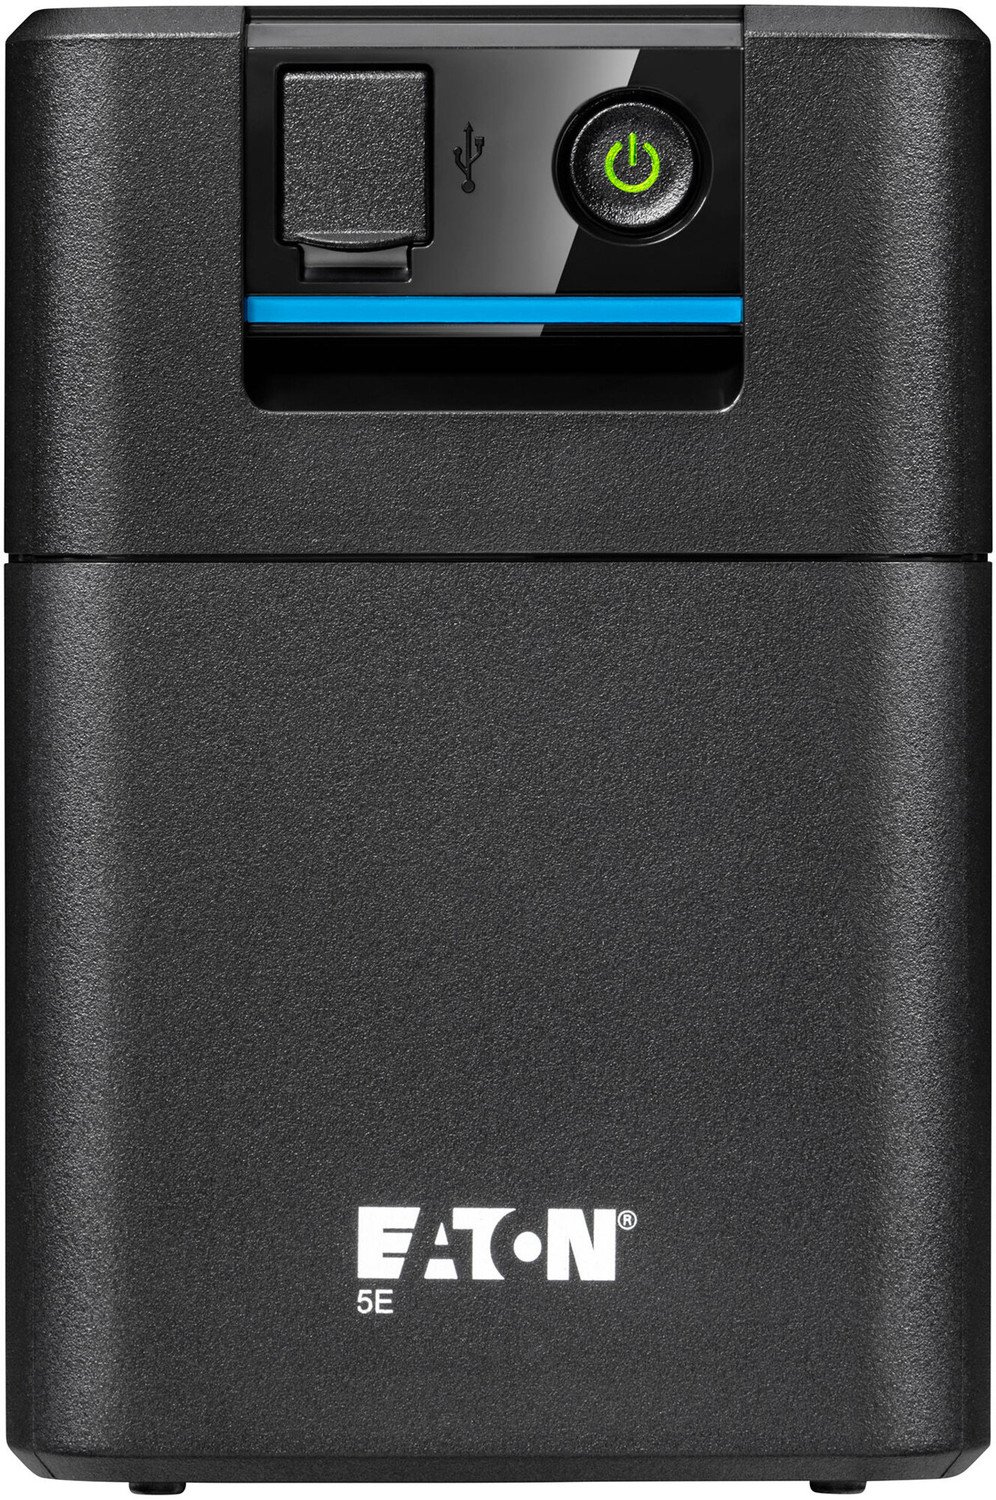 Eaton 5E 900 USB FR G2 - 5E900UF